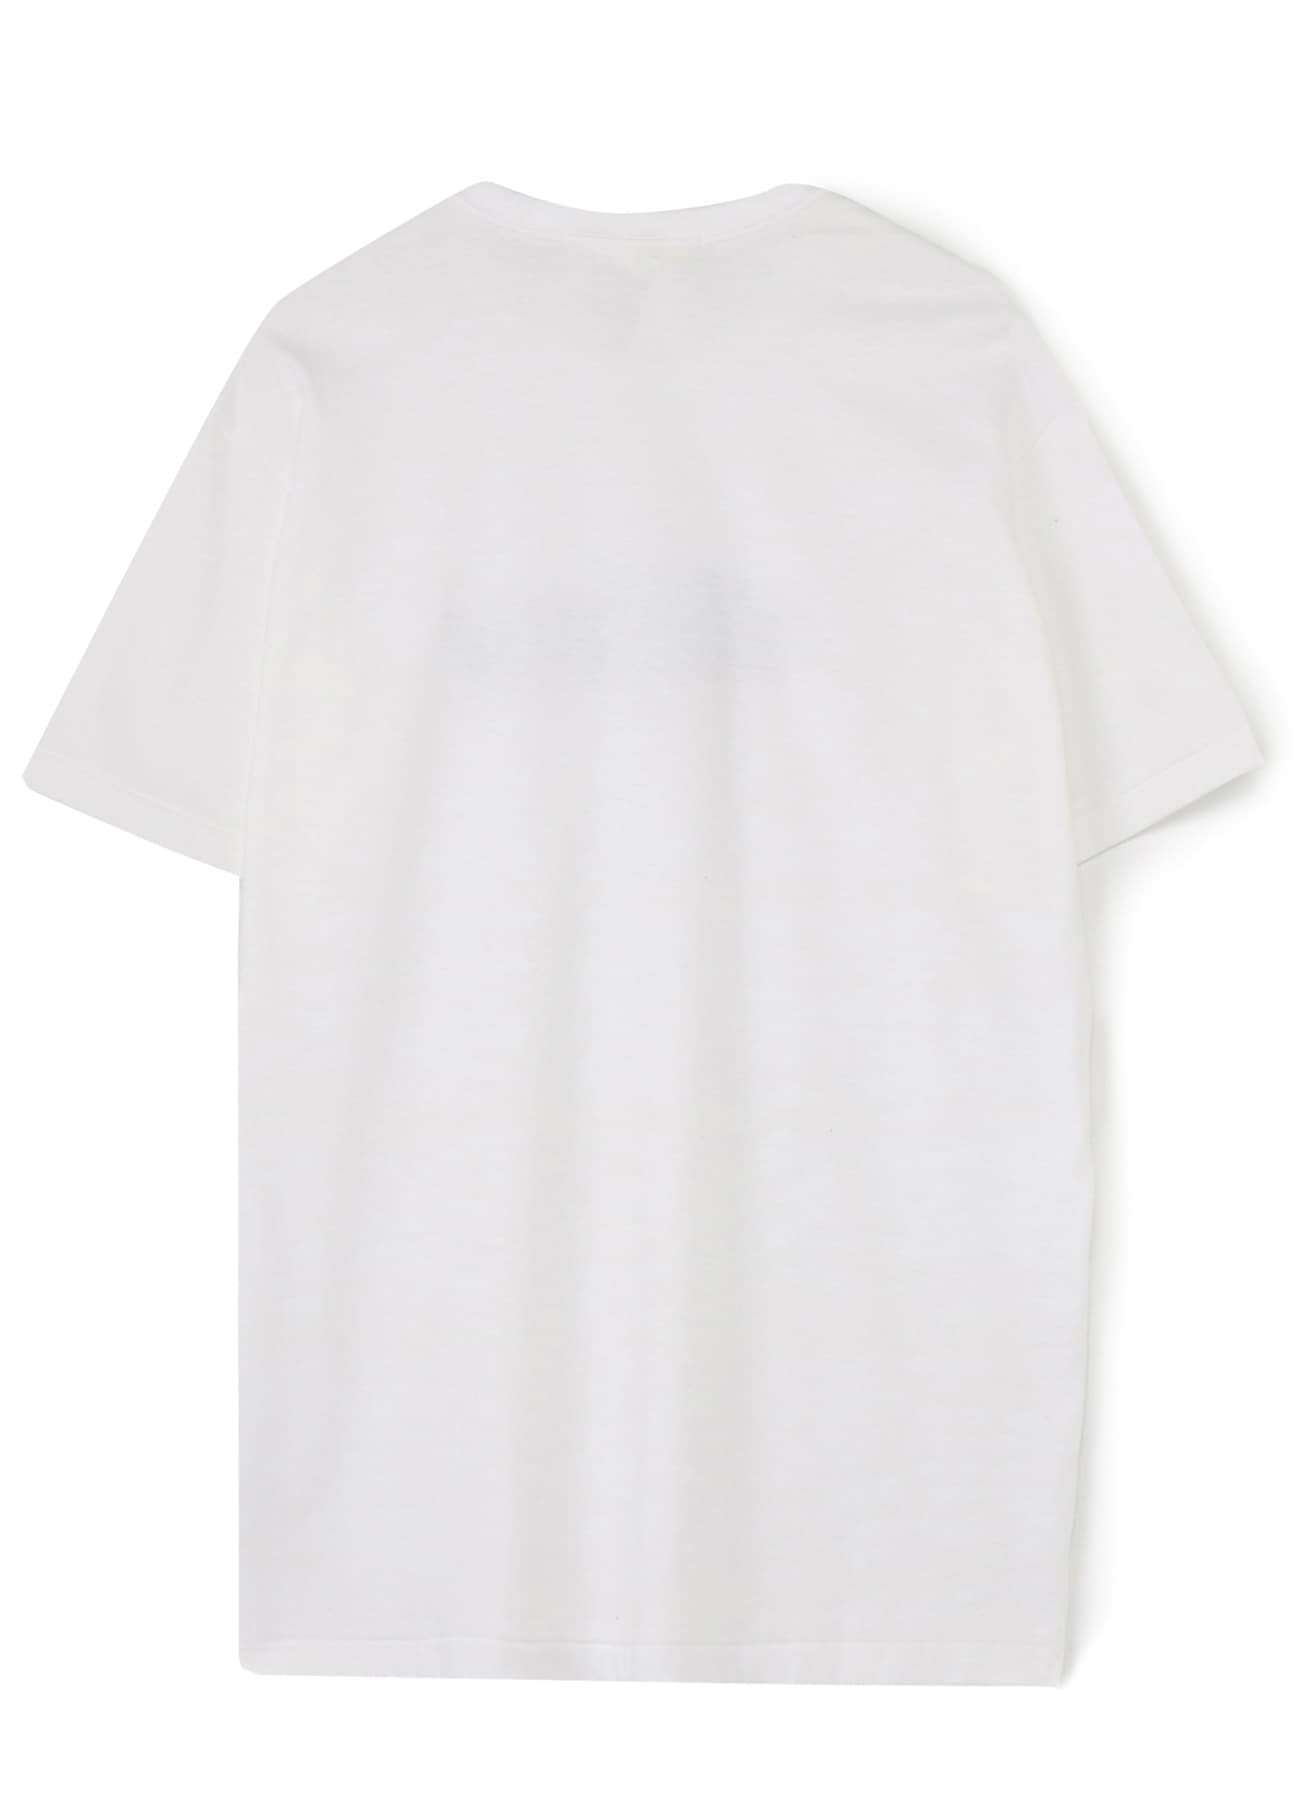 20/-Plain Stitch Feu Print T-Shirt A